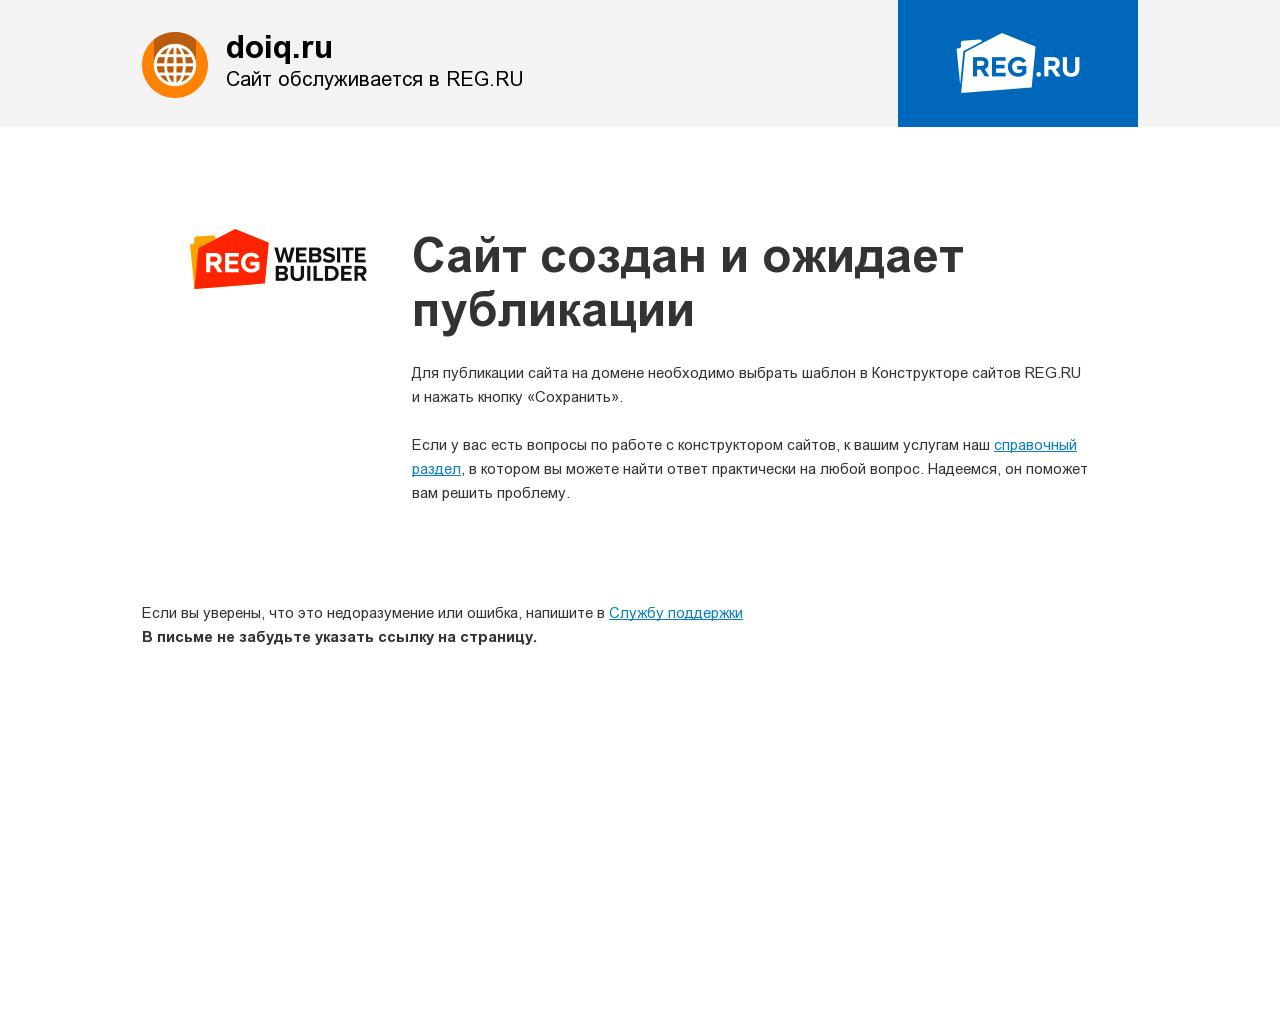 Изображение сайта doiq.ru в разрешении 1280x1024